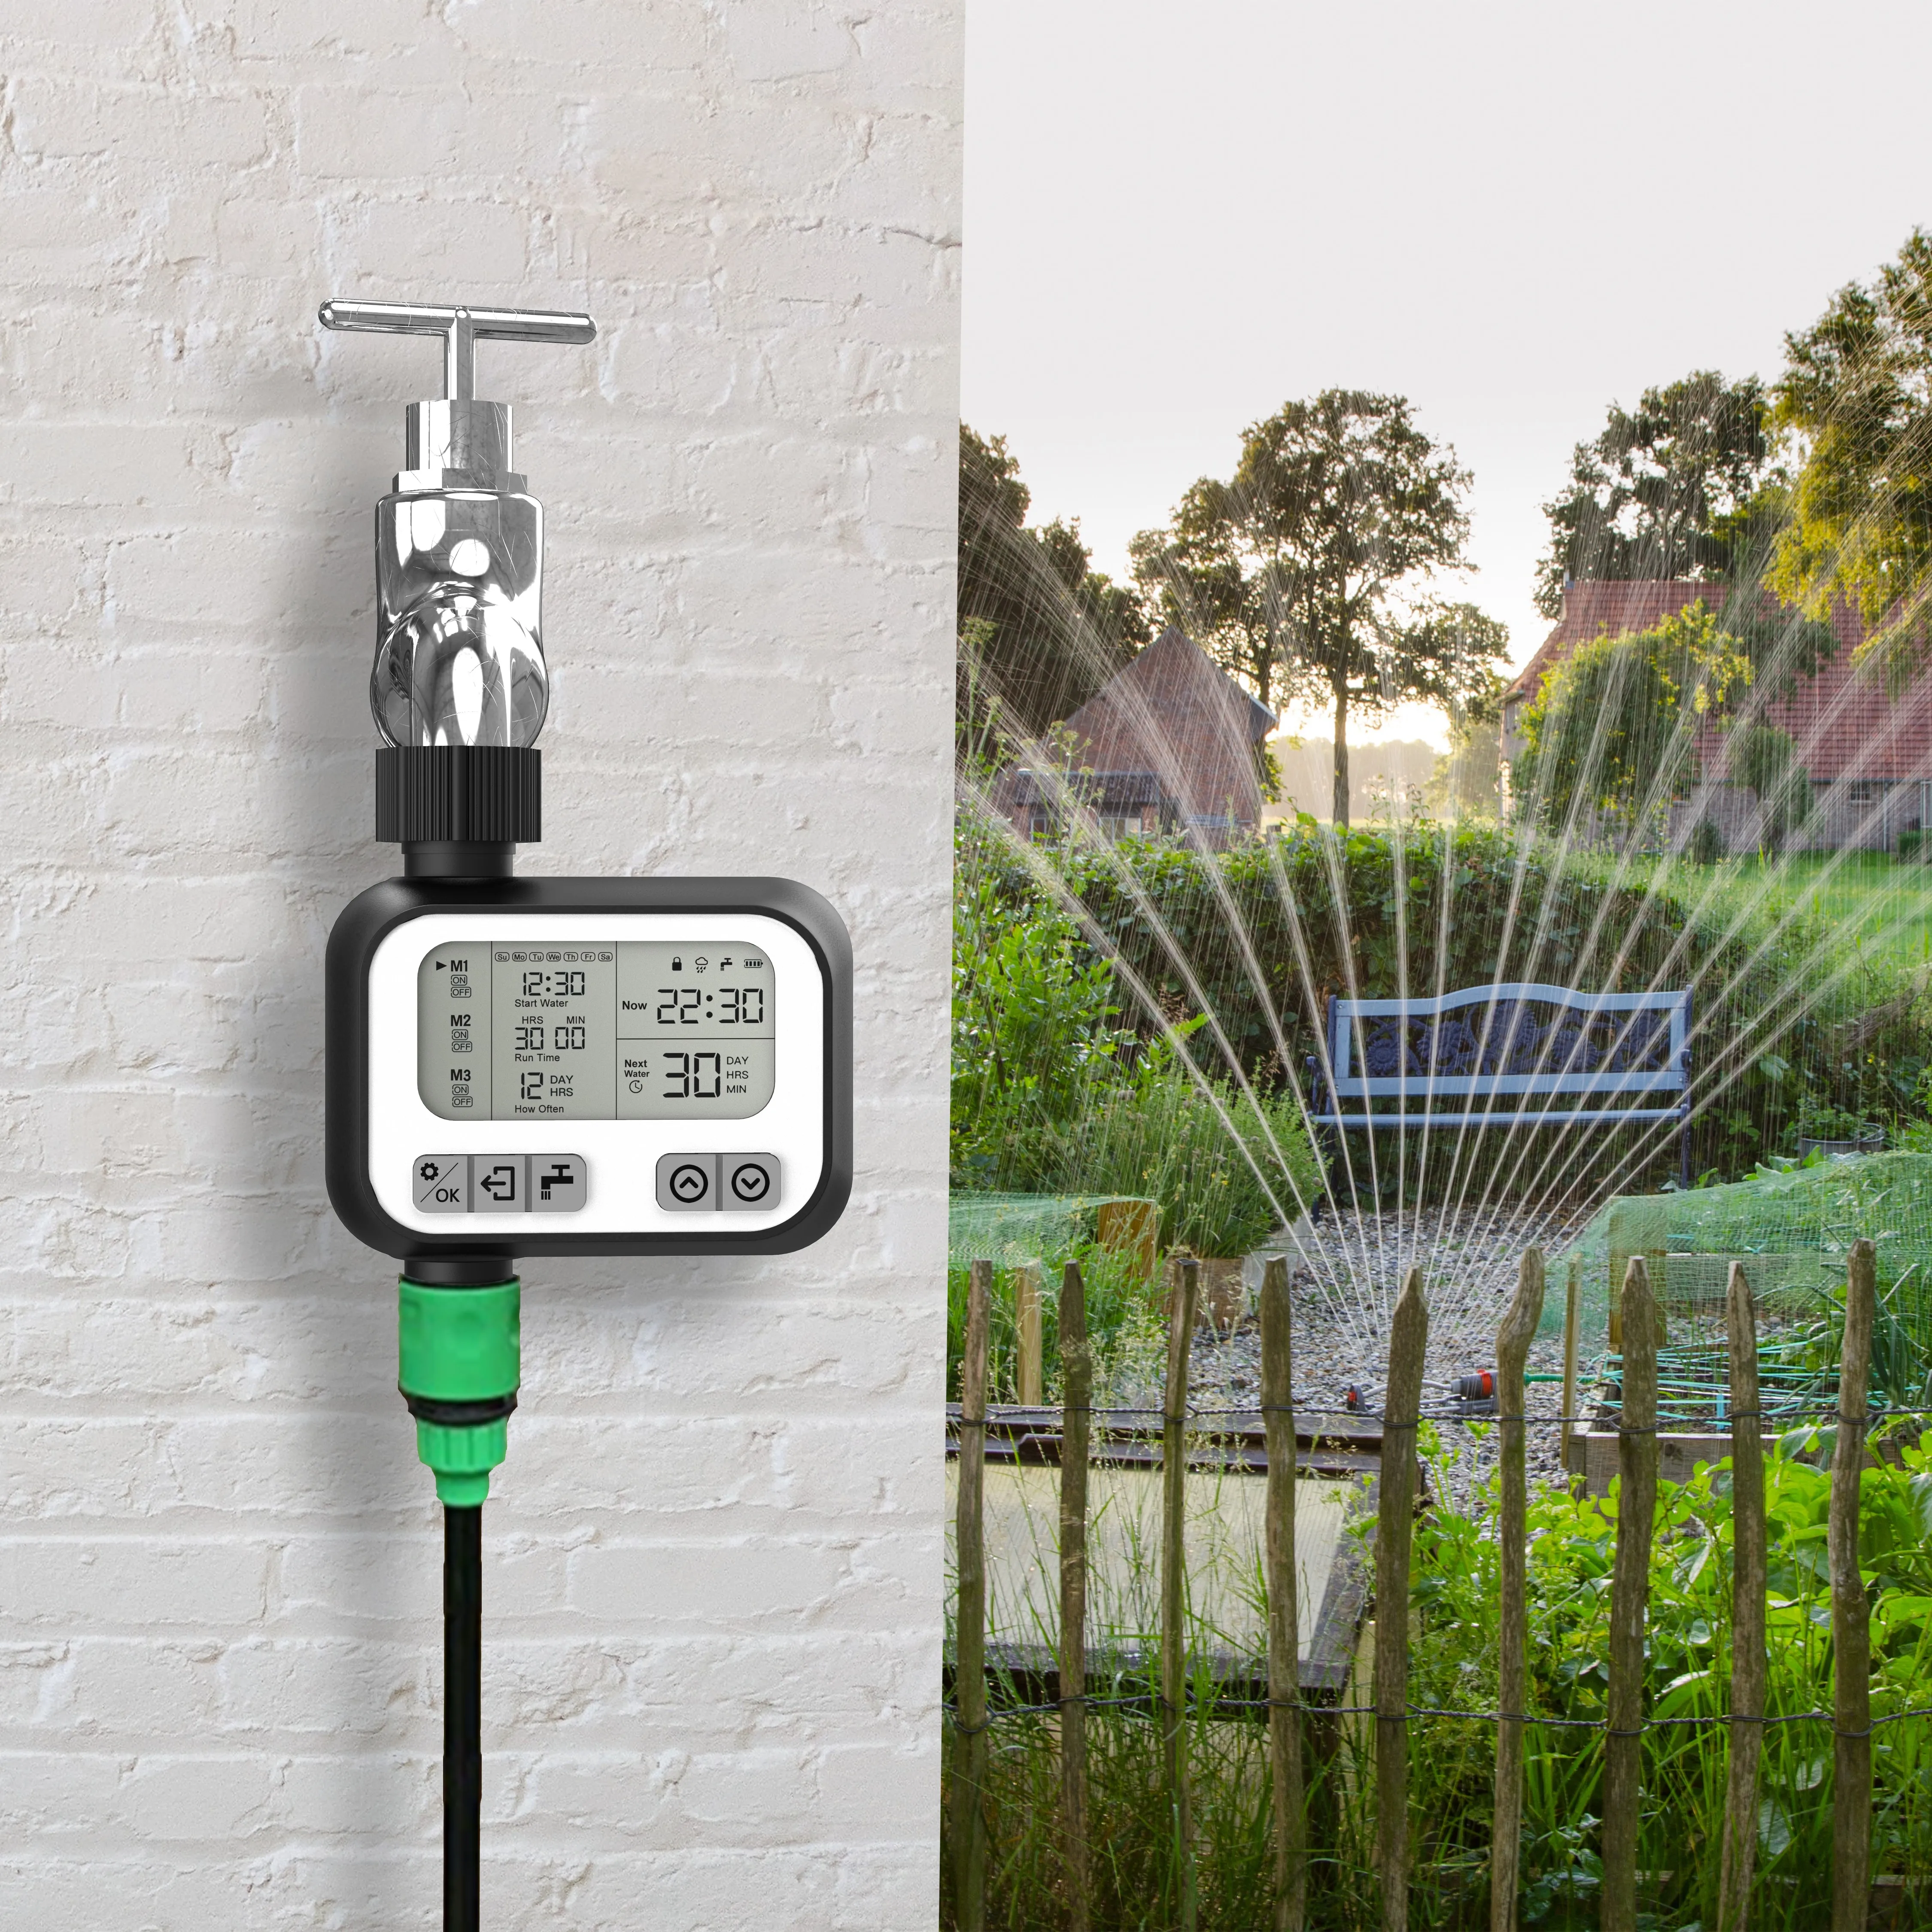 
Automatic watering timer digital garden water pump controller 